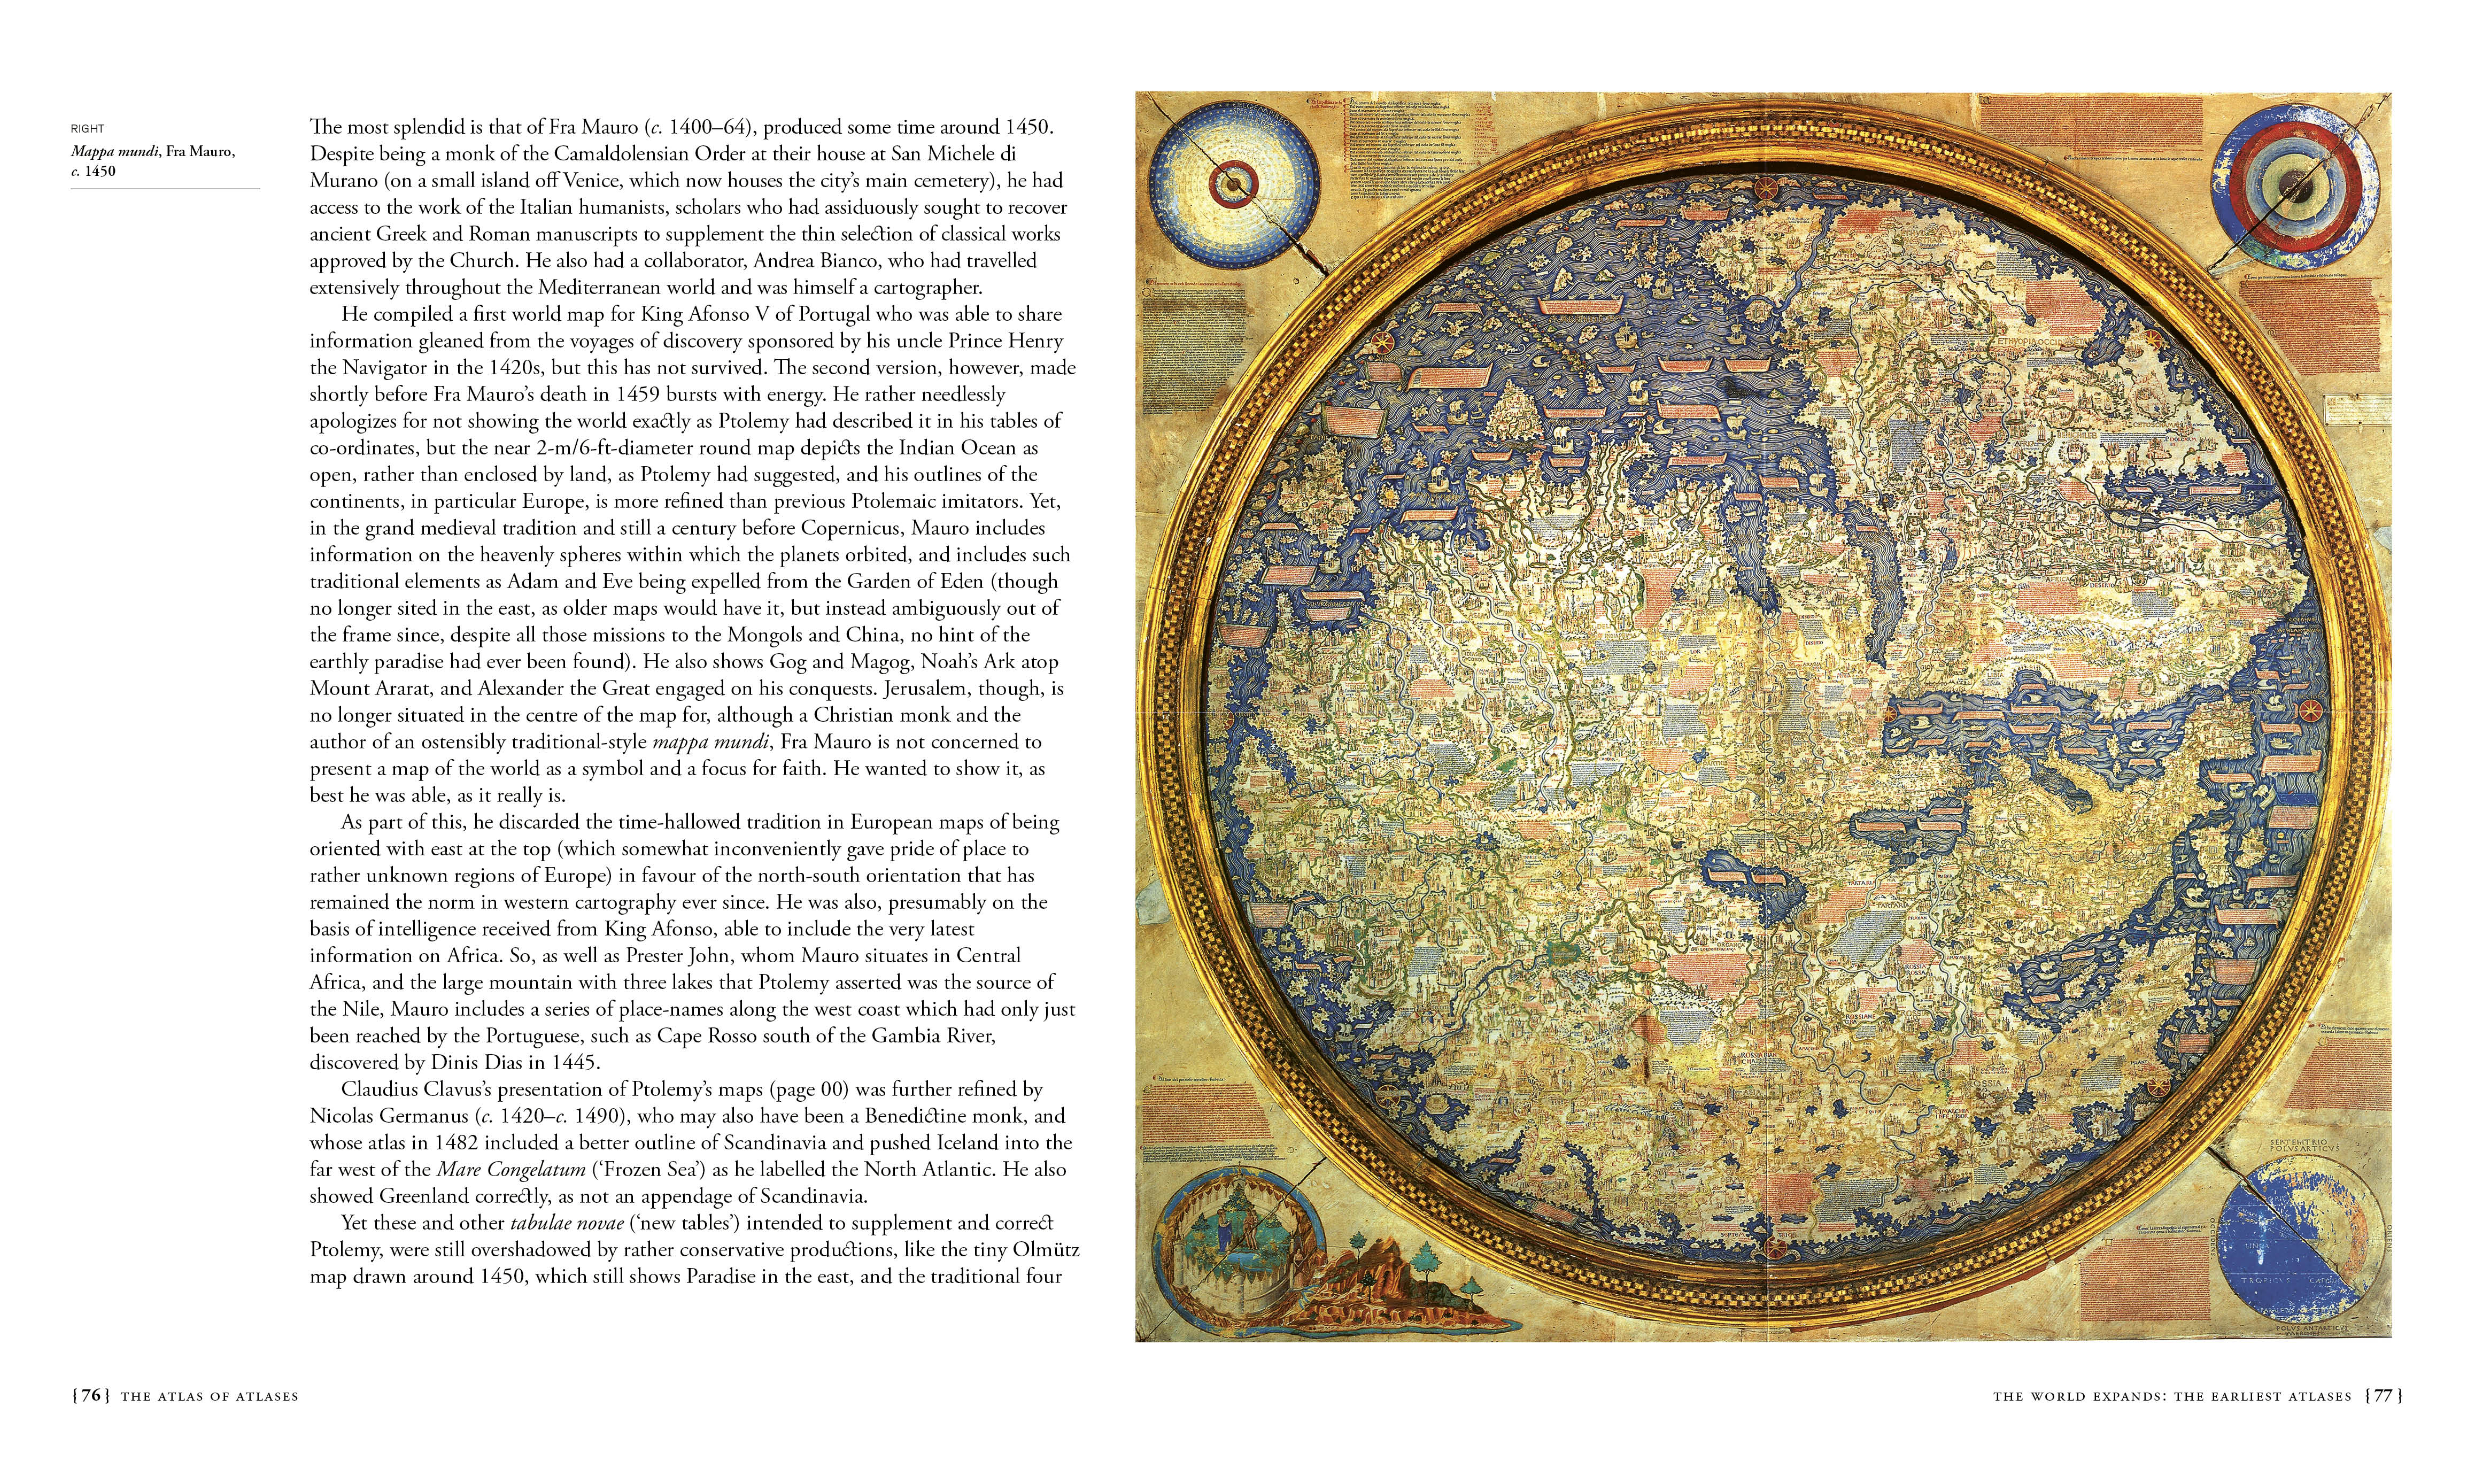 The Atlas of Atlases